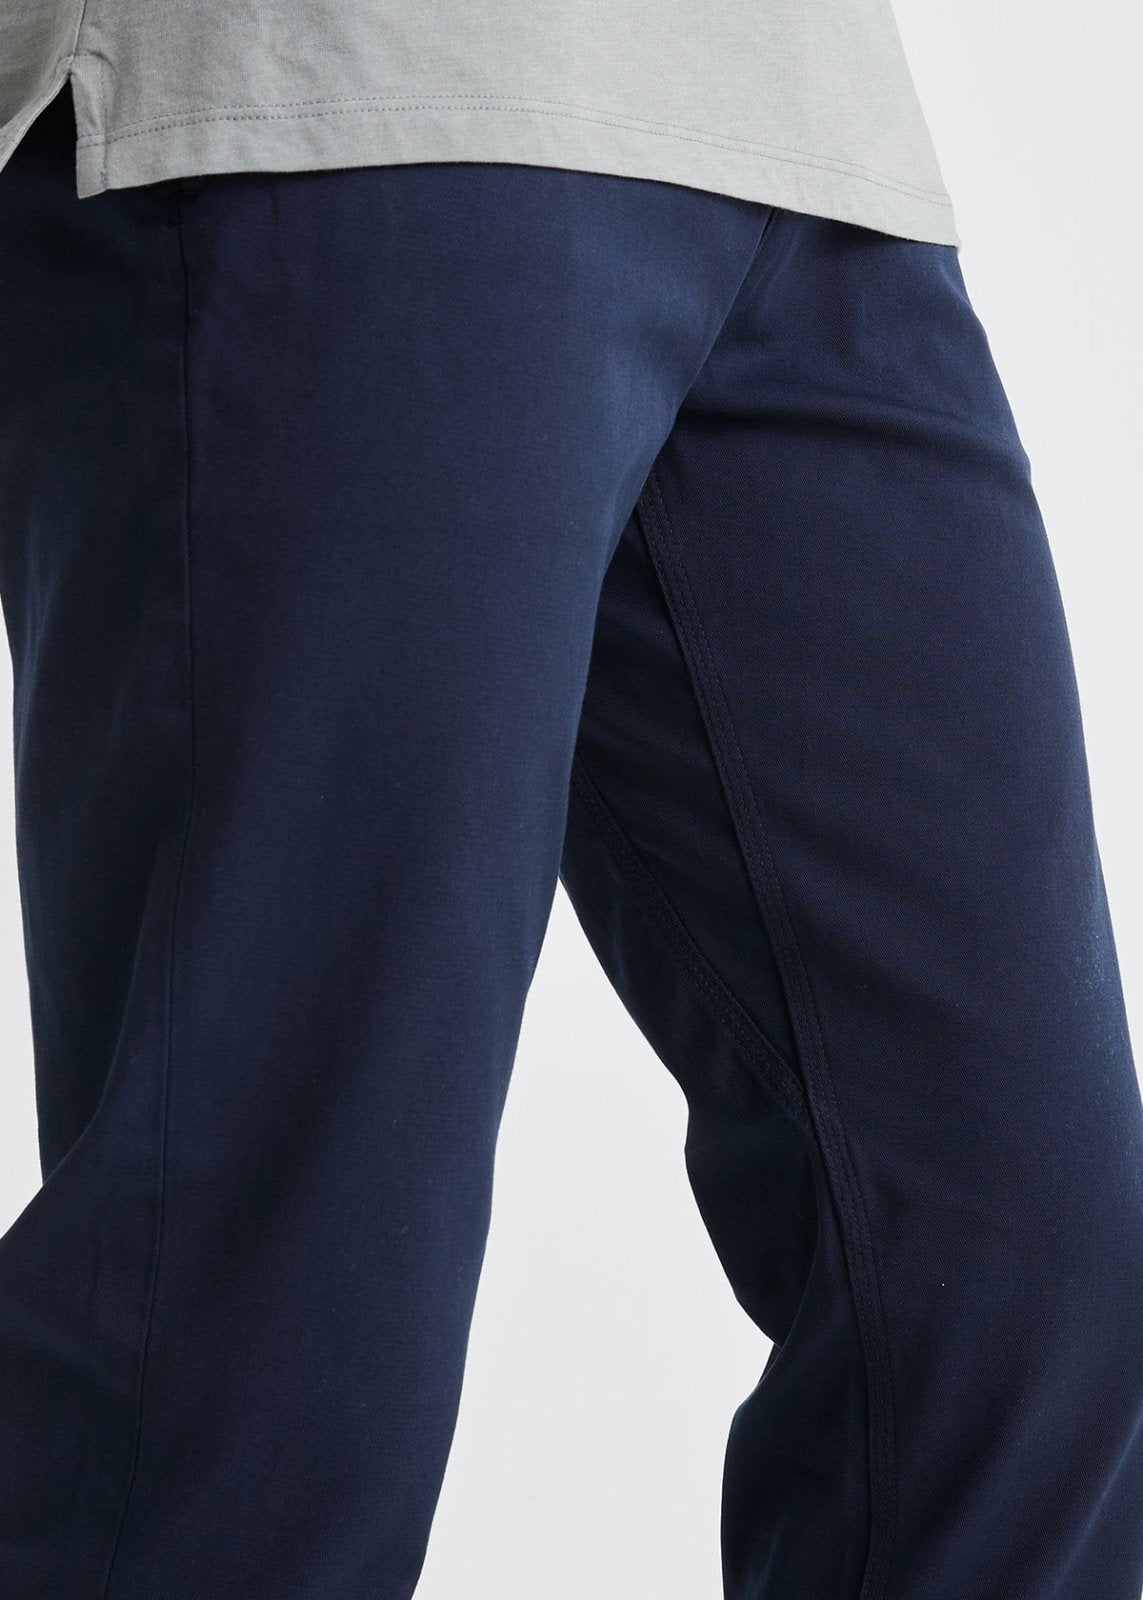 mens stretch deep blue chino pants gusset detail